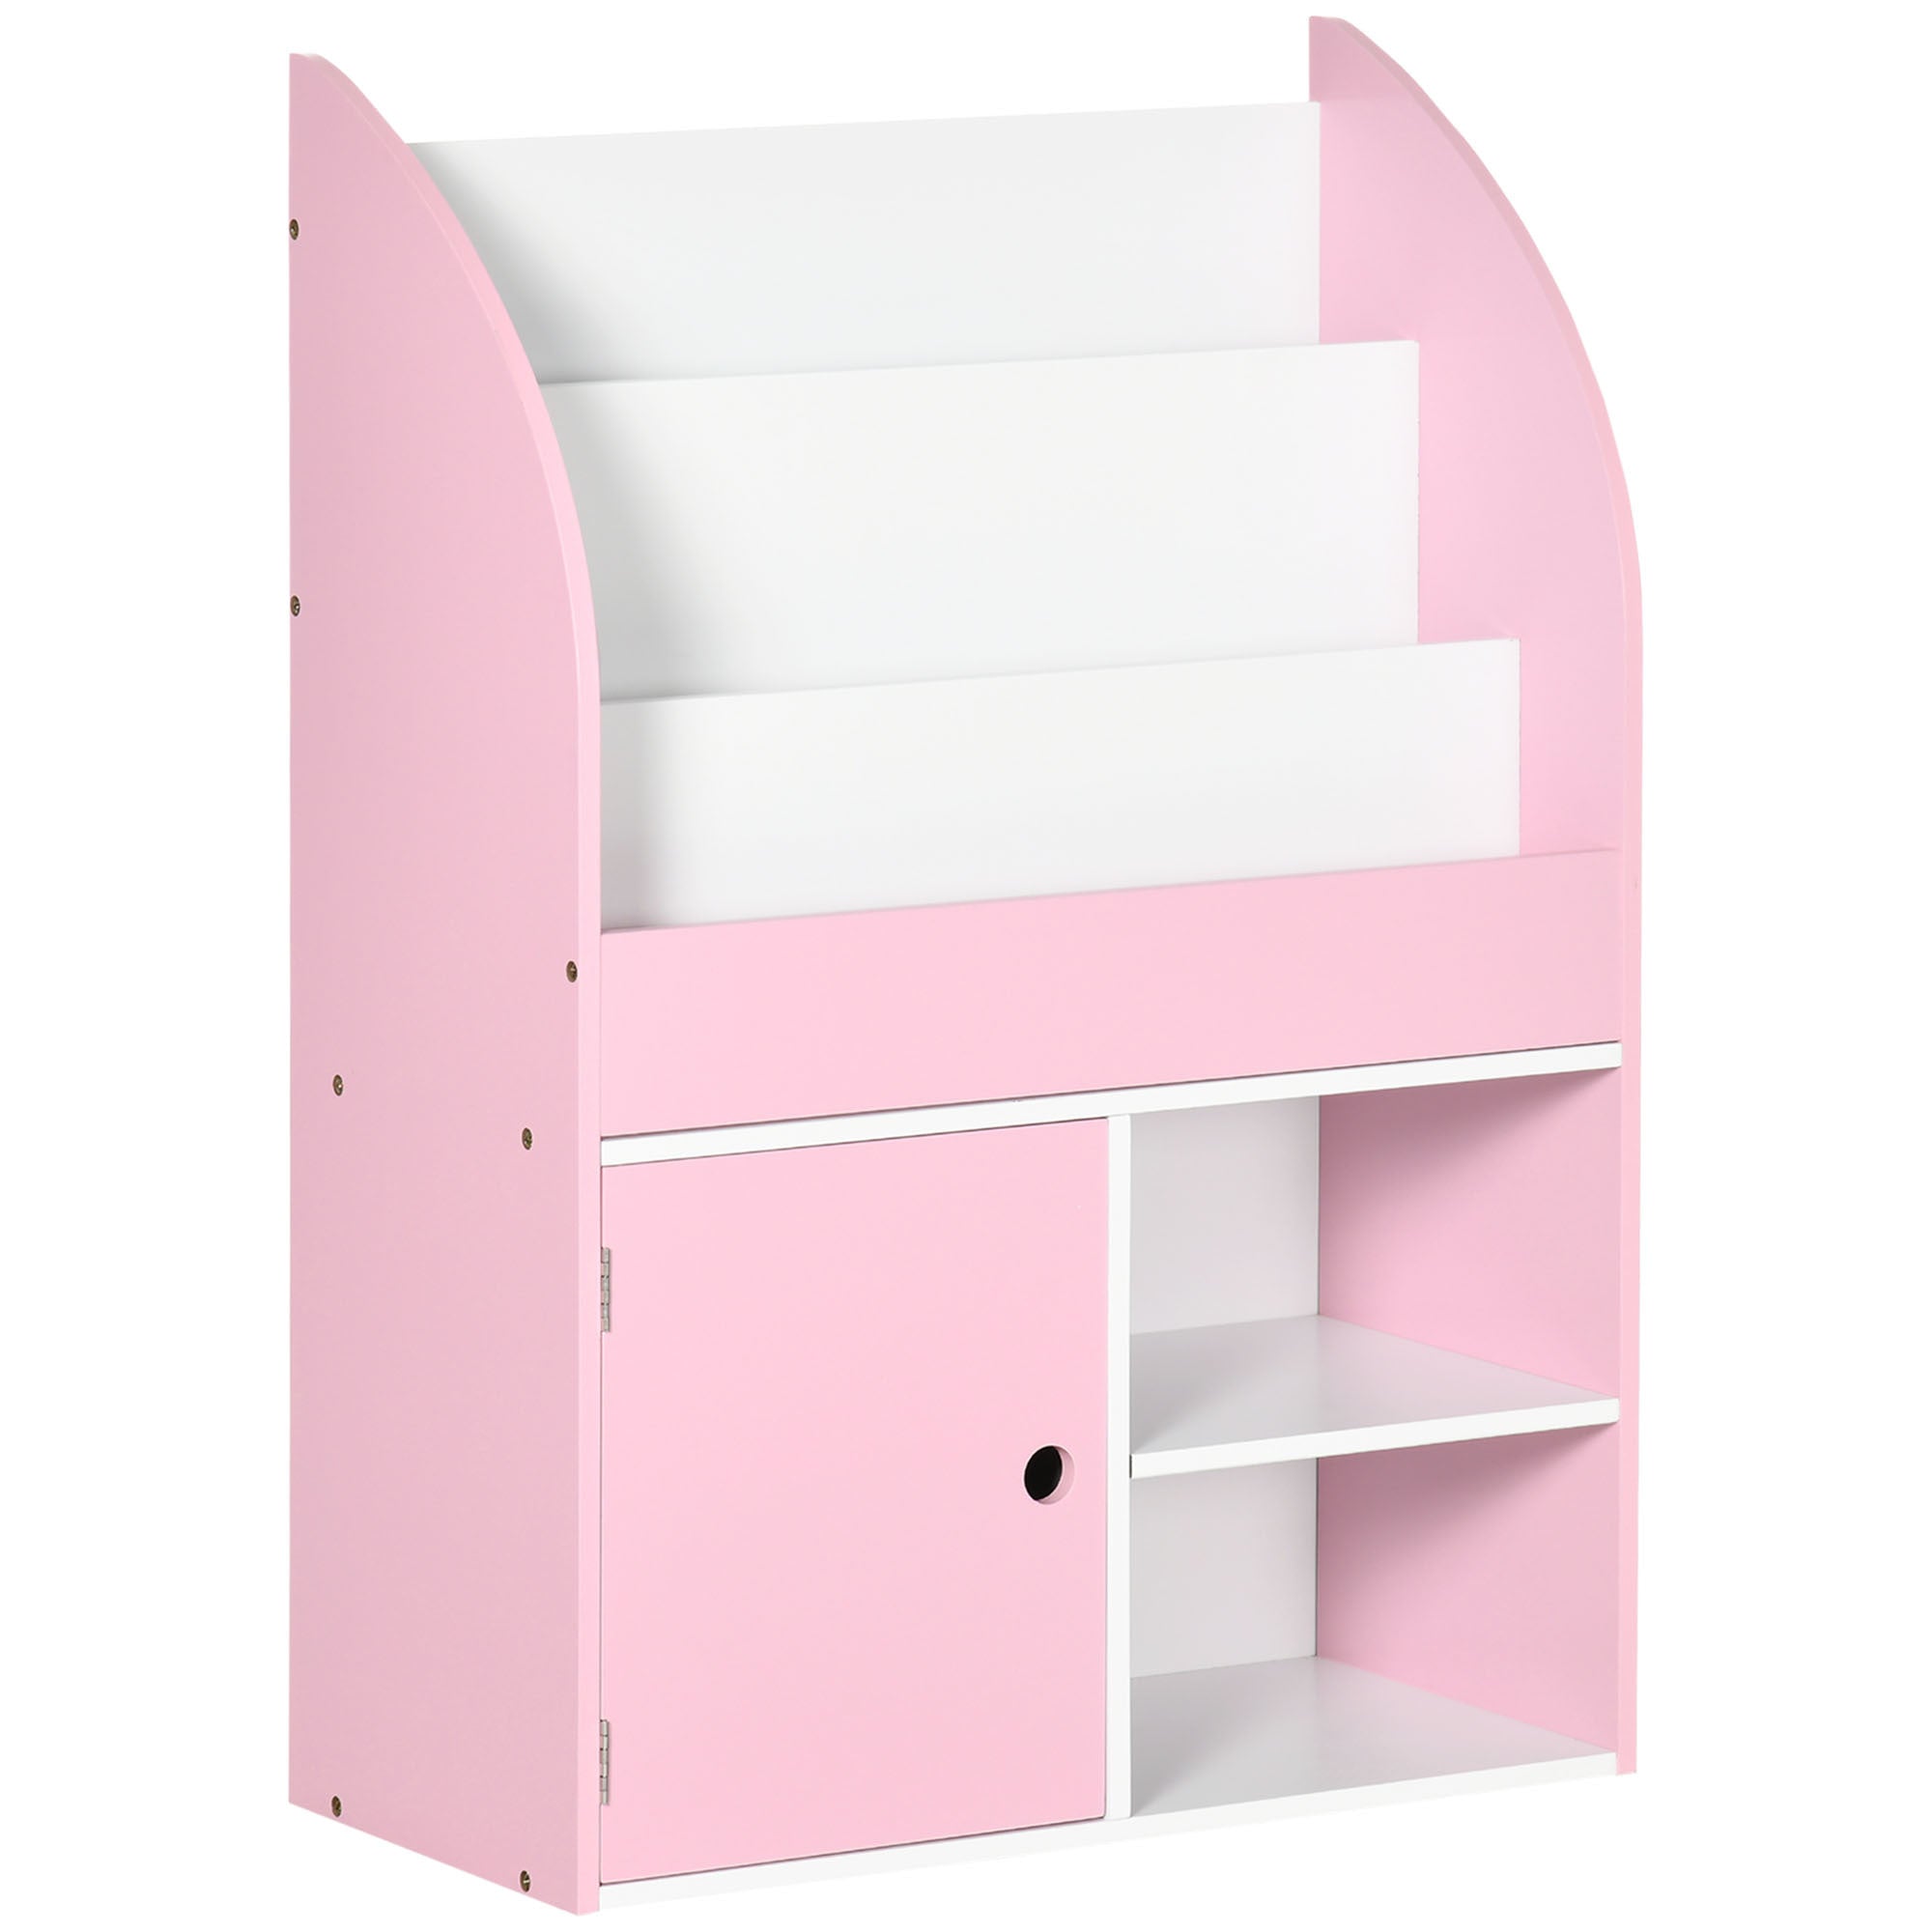 Qaba Bookshelf, Multi Purpose Kids Toy Storage pink-mdf